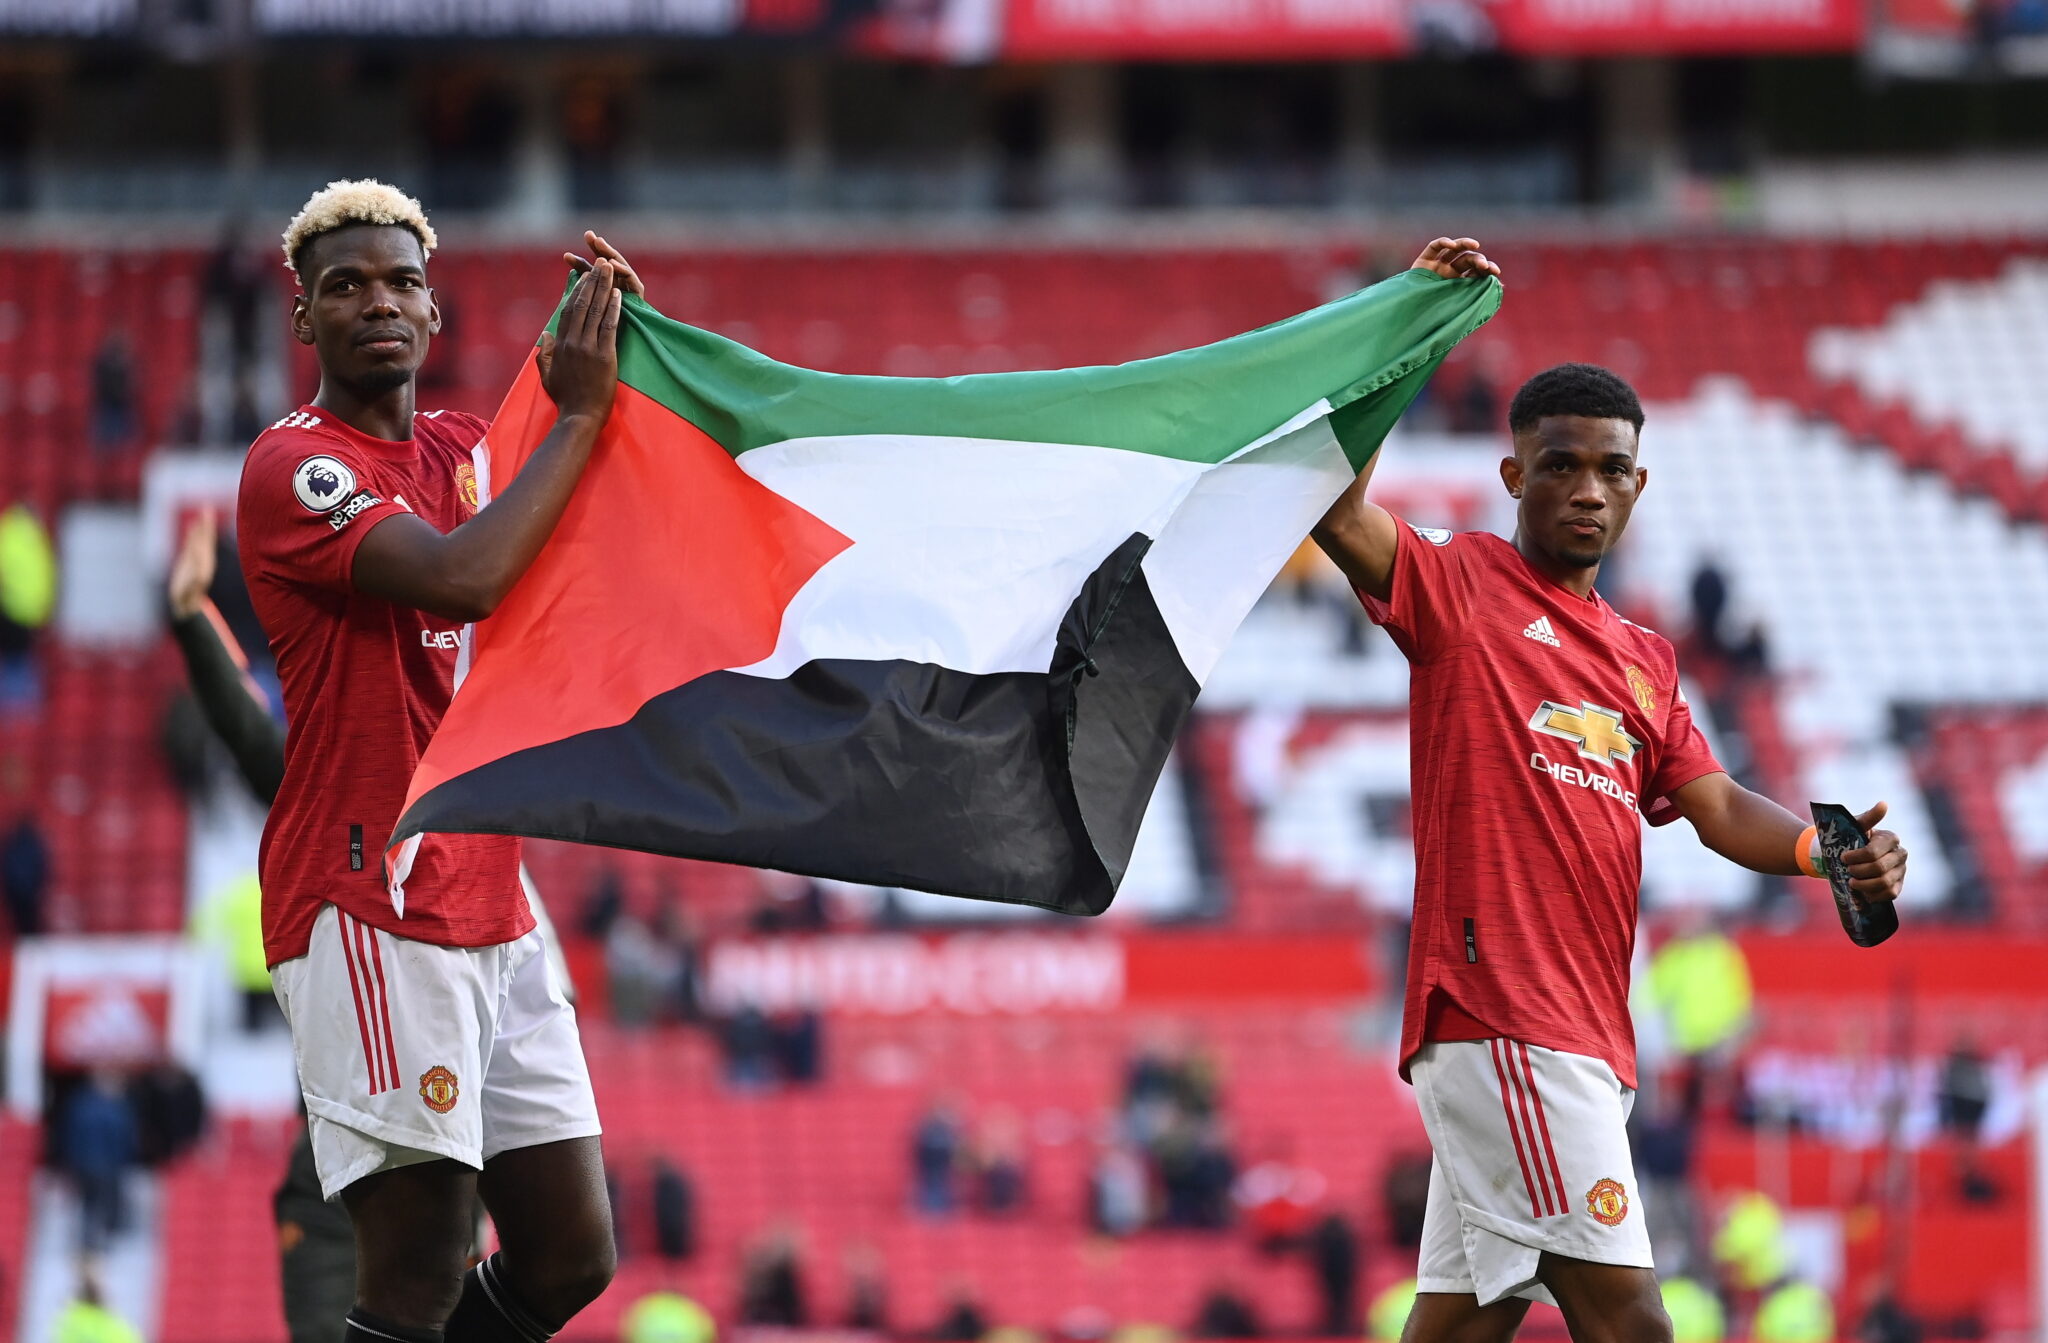 Piłkarze Manchesteru solidarni z Palestyną. fot. EPA/Laurence Griffiths / POOL 